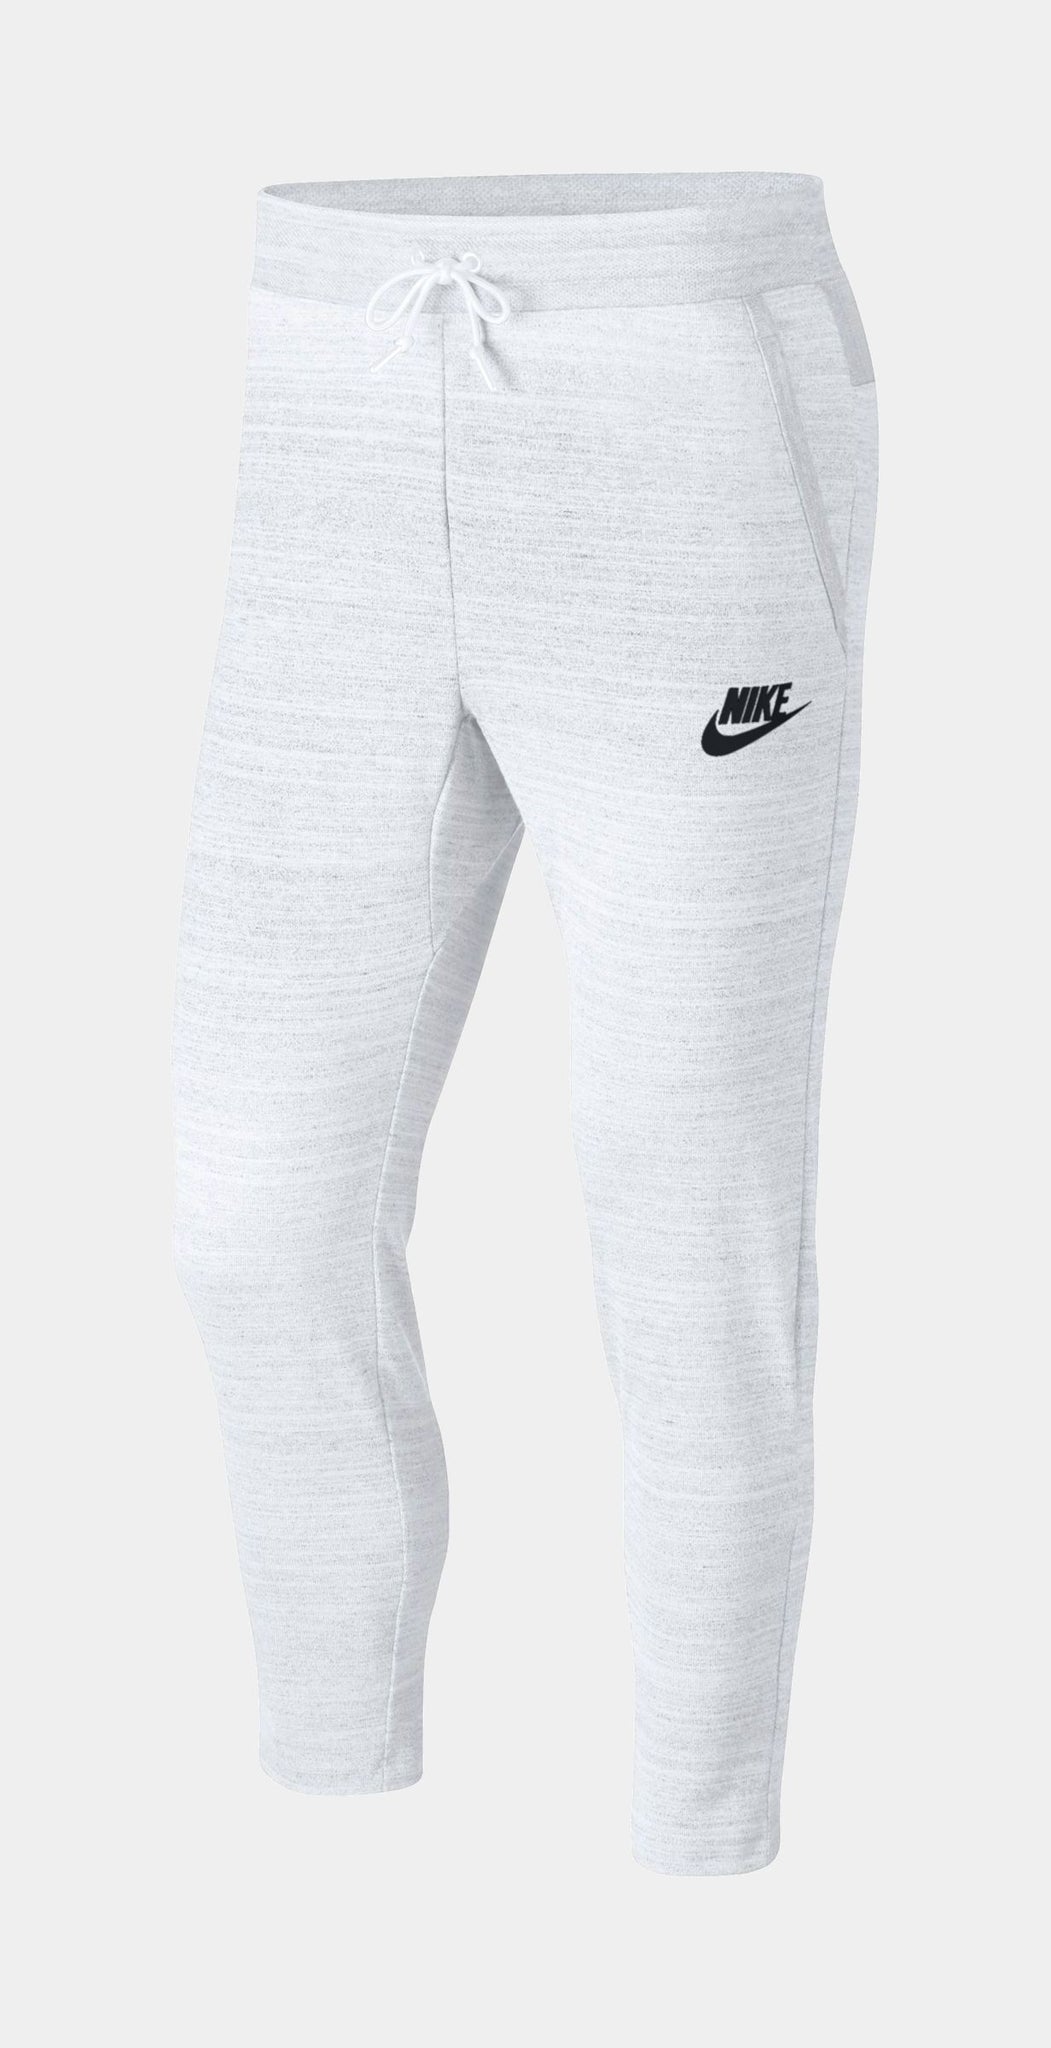 Nike Sportswear 15 Mens Knit White 885923-100 Shoe Palace